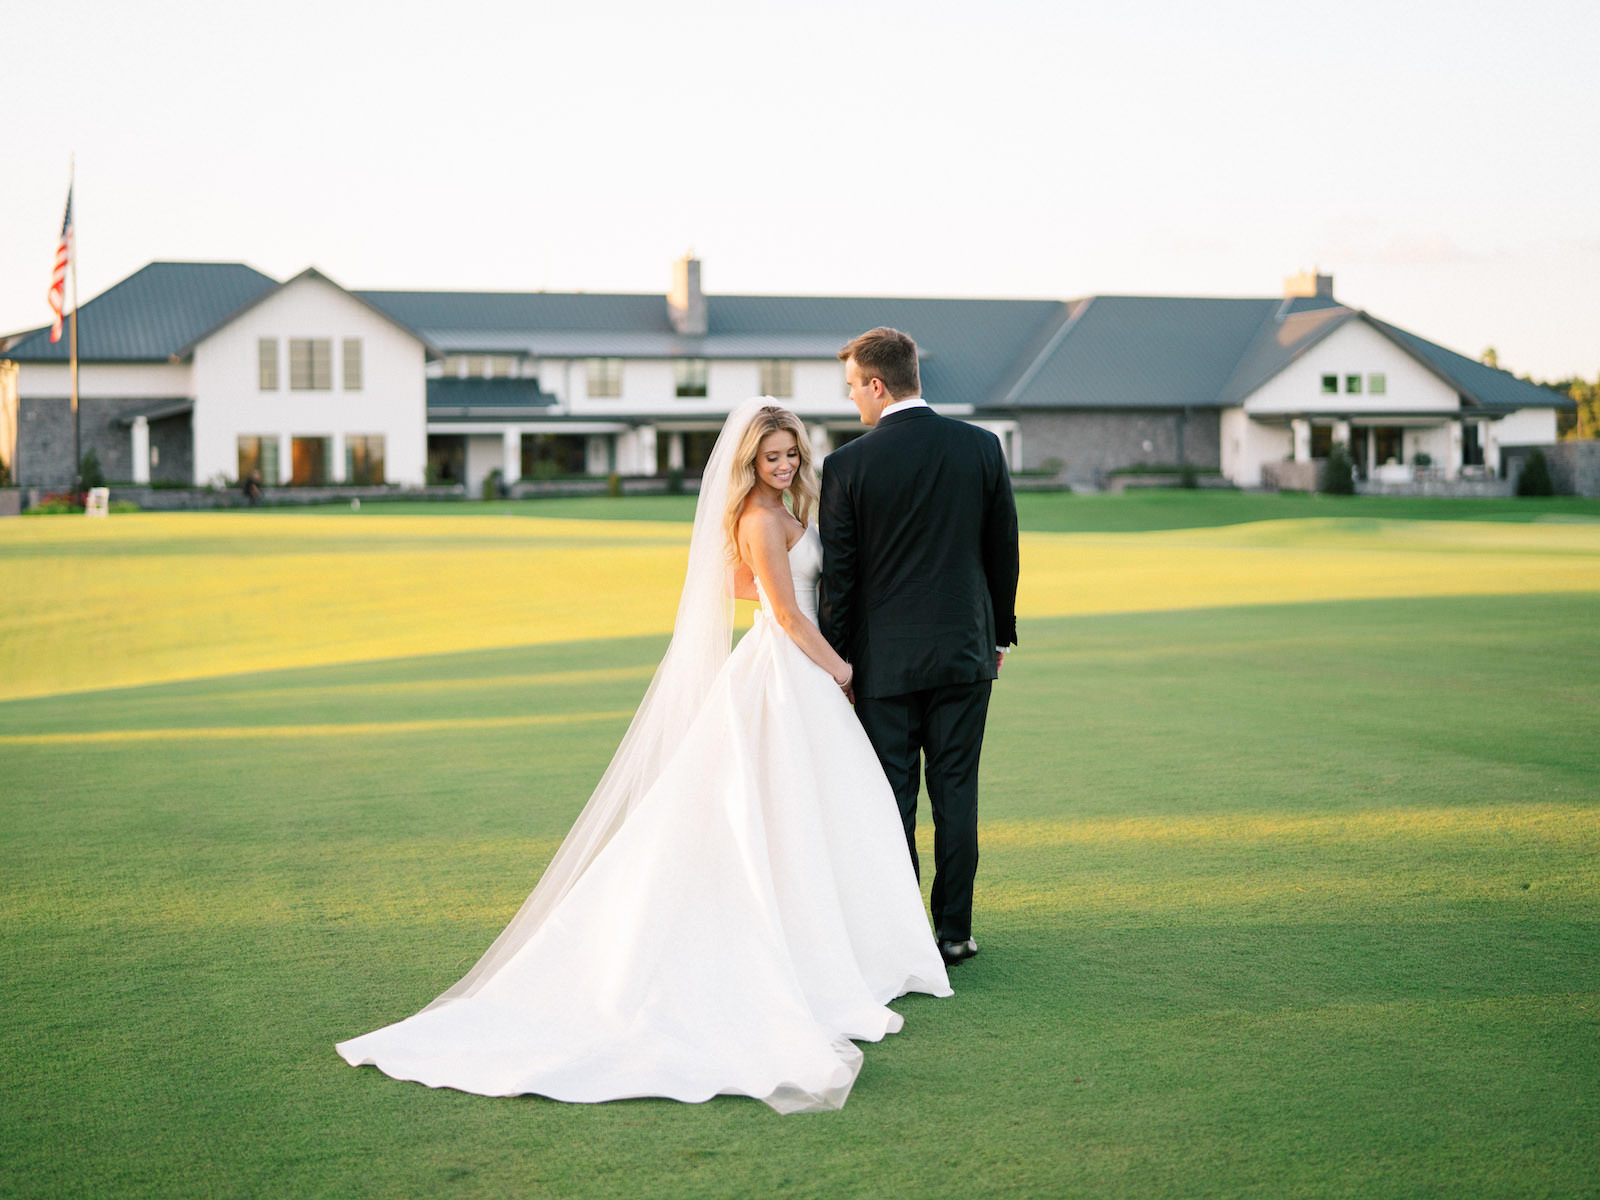 Luxurious Formal Bride and Groom Wedding Portrait | Tampa Bay Wedding Venue Pelican Golf Club